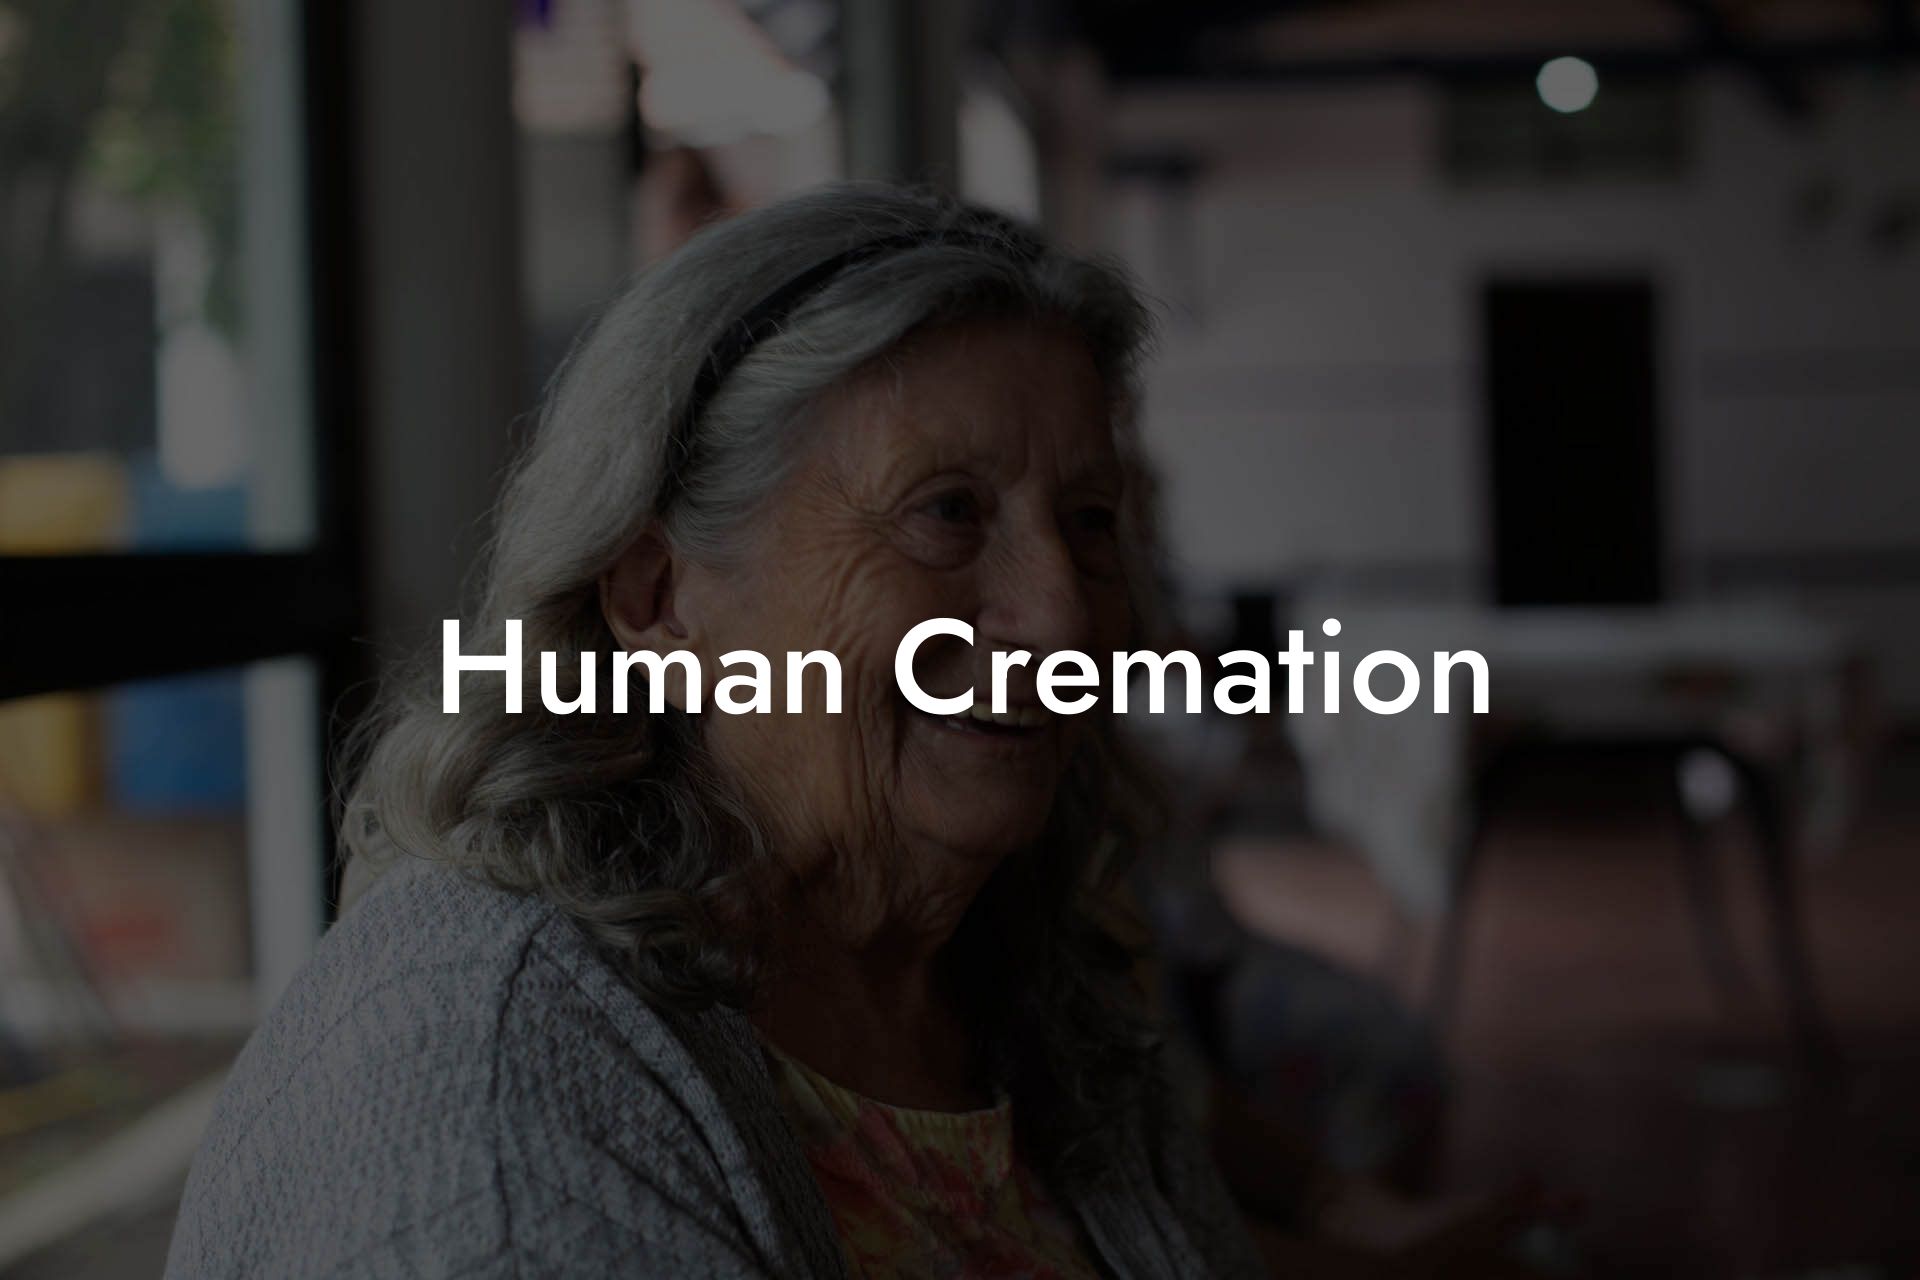 Human Cremation